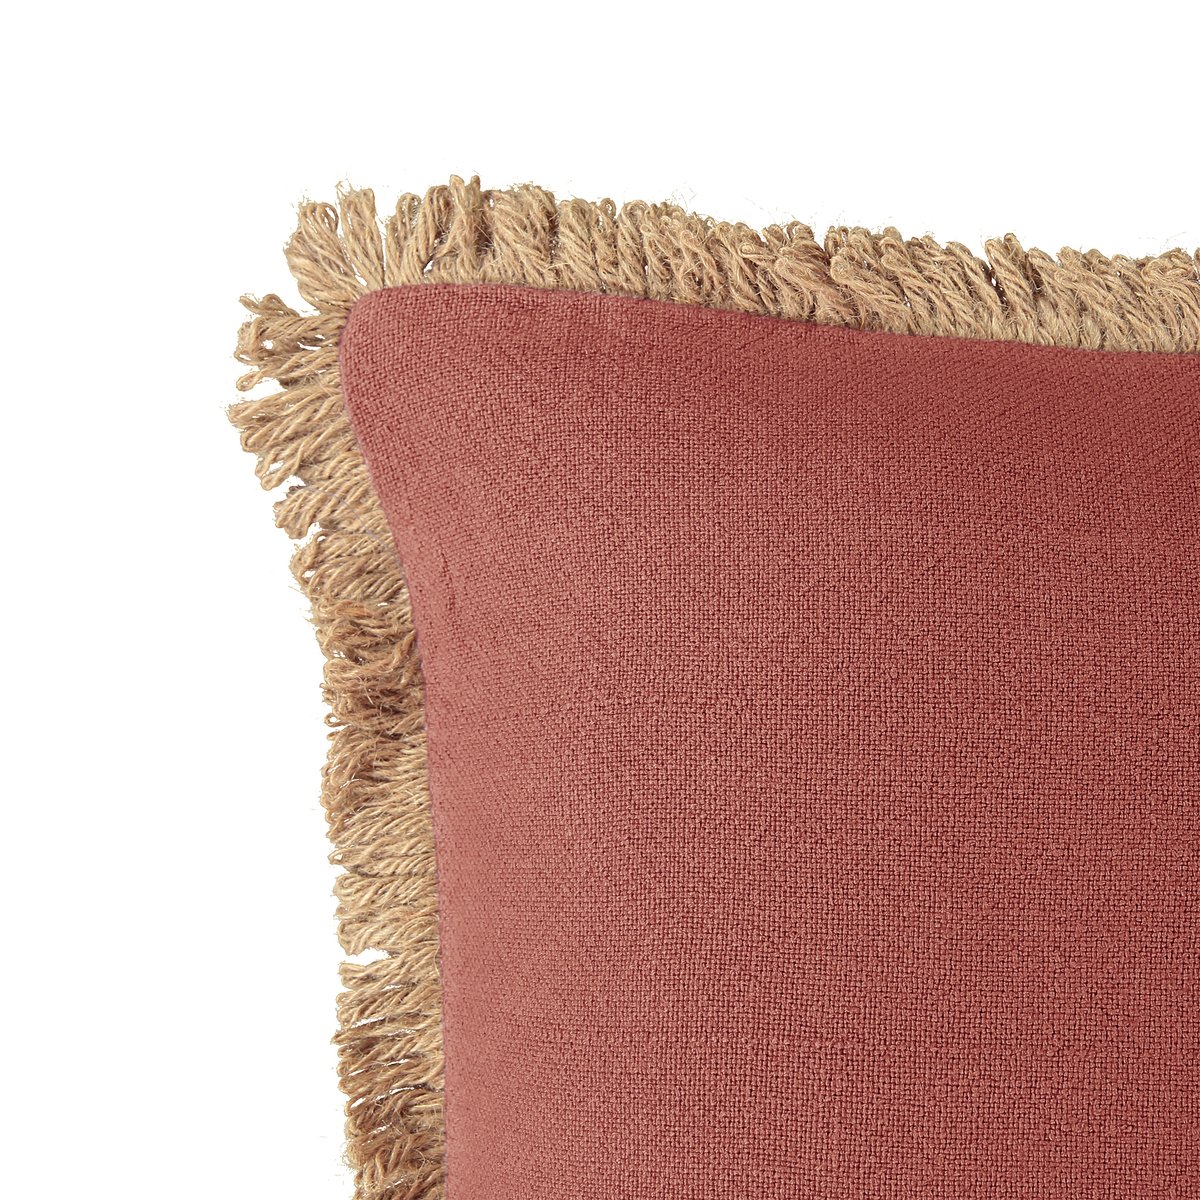 Чехол La Redoute На подушку из джута Jutty 50 x 50 см красный, размер 50 x 50 см - фото 4